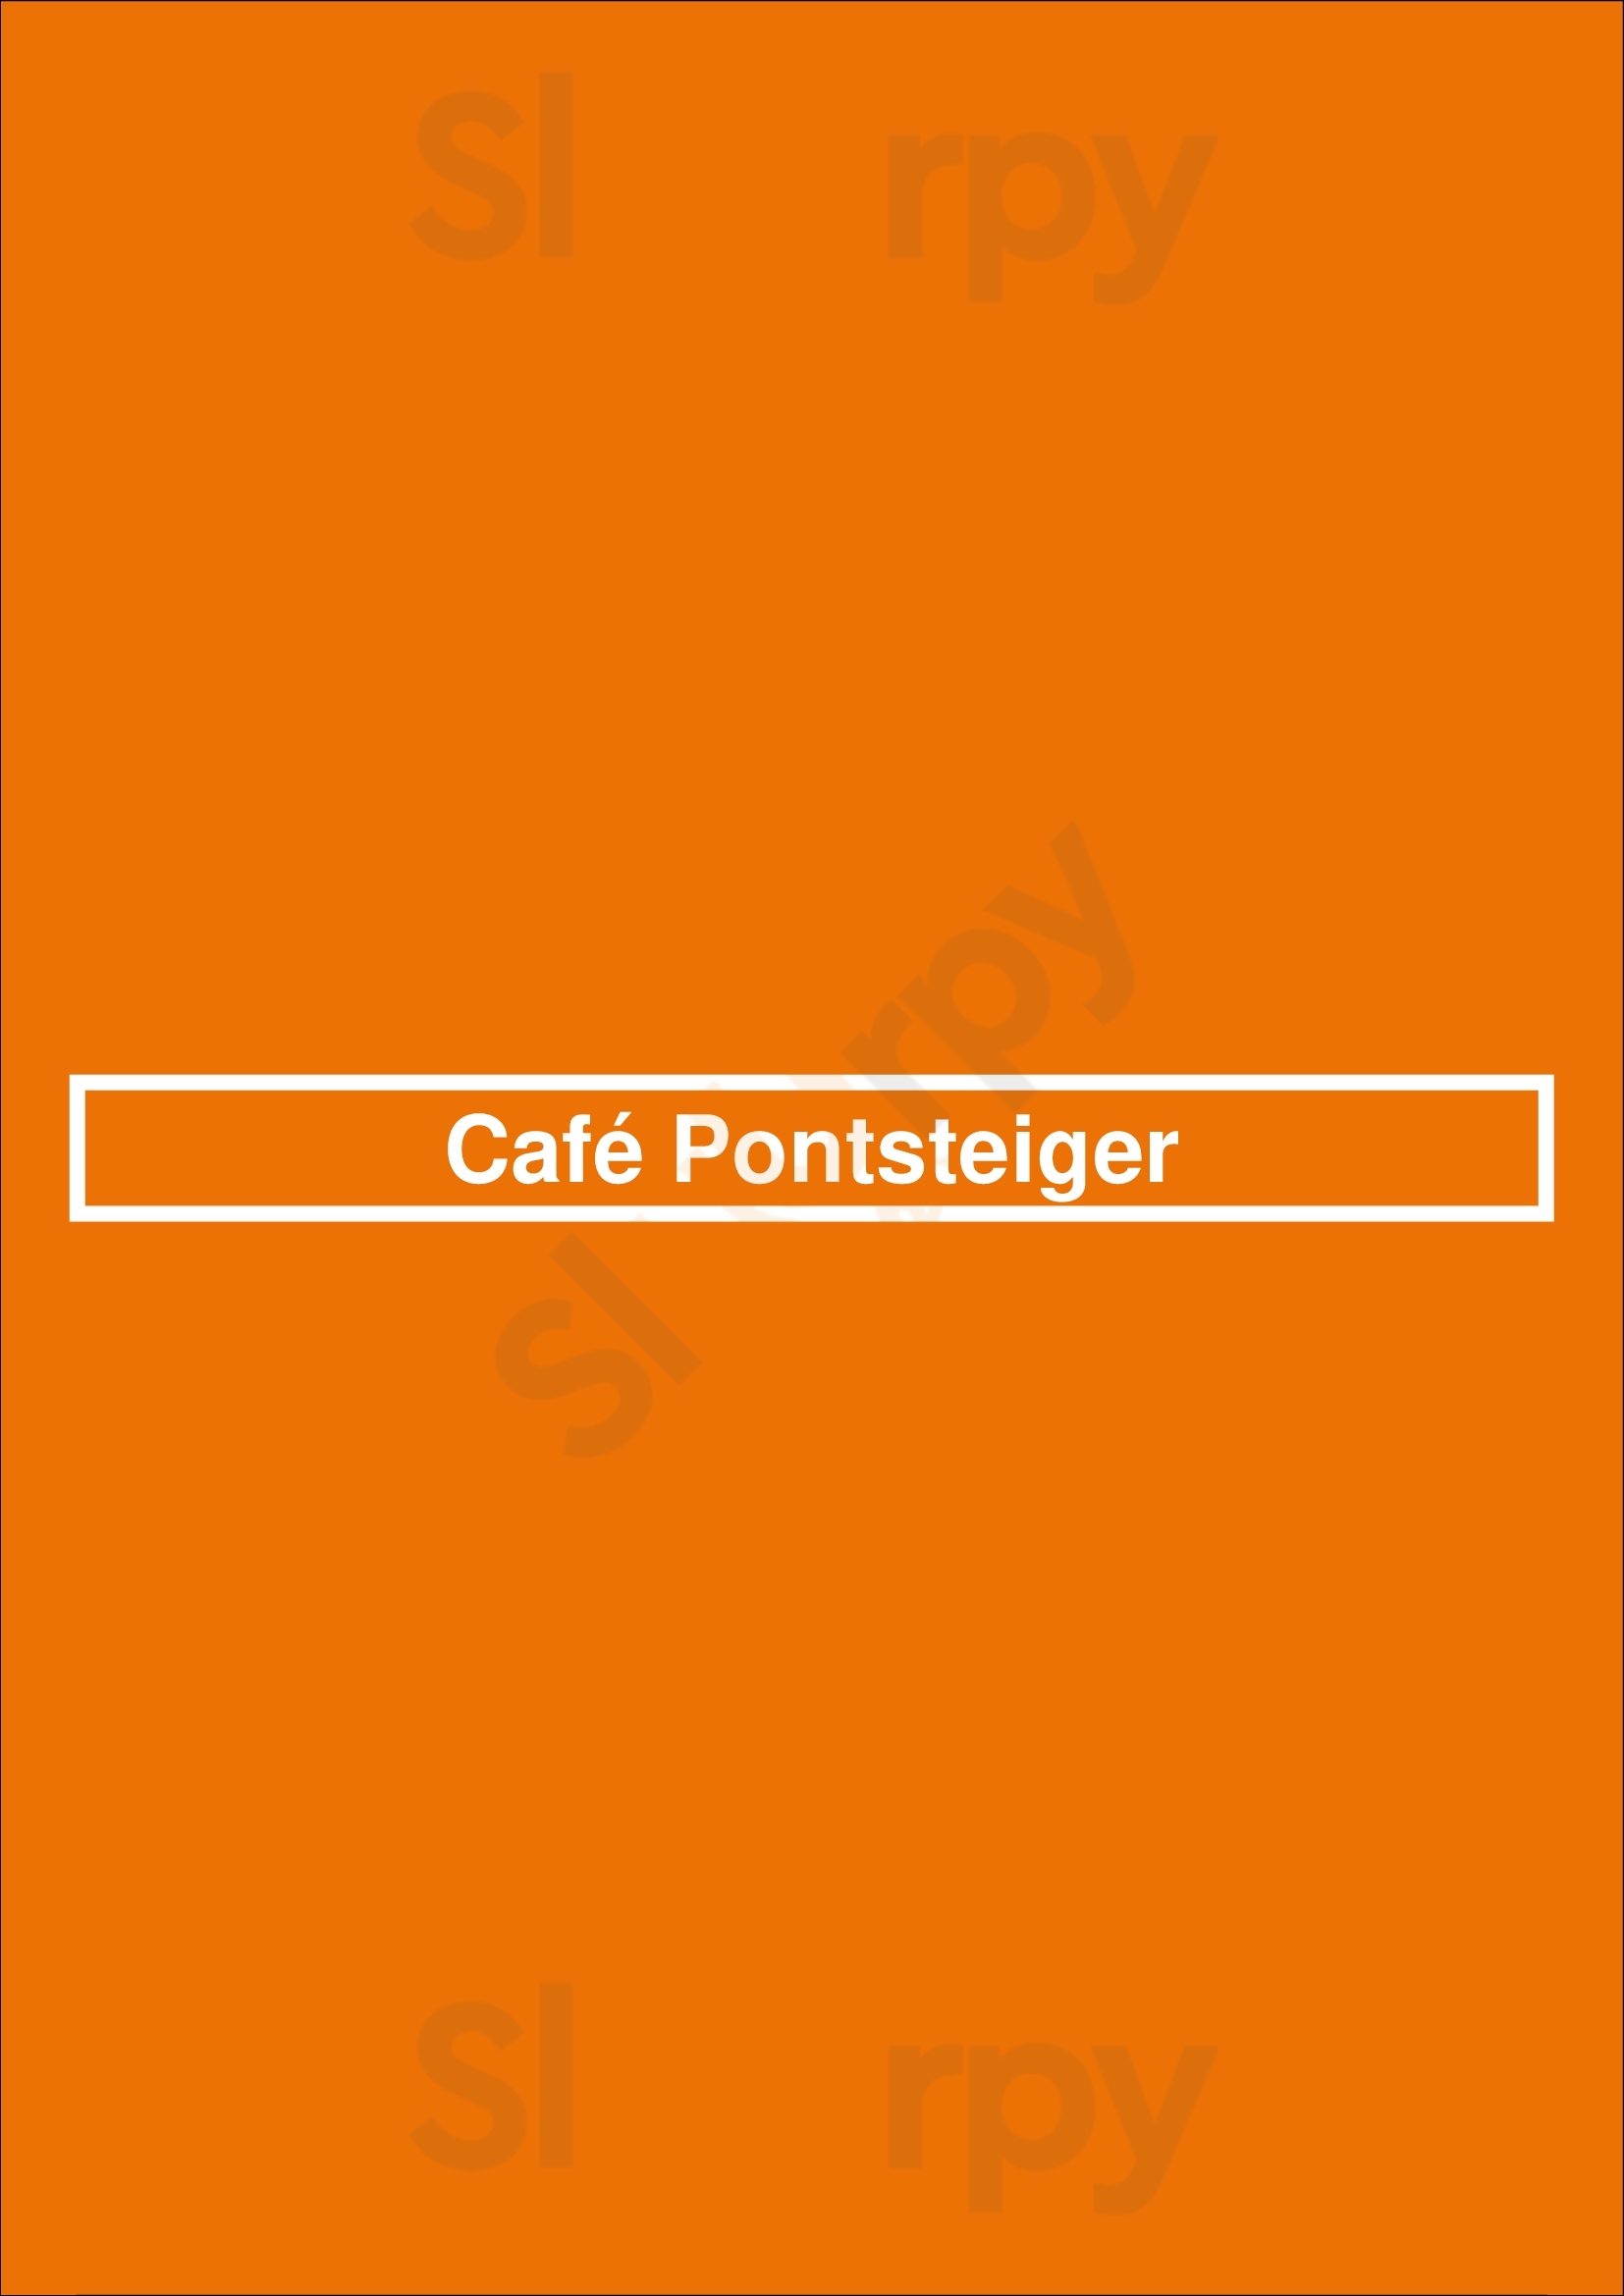 Café Pontsteiger Amsterdam Menu - 1